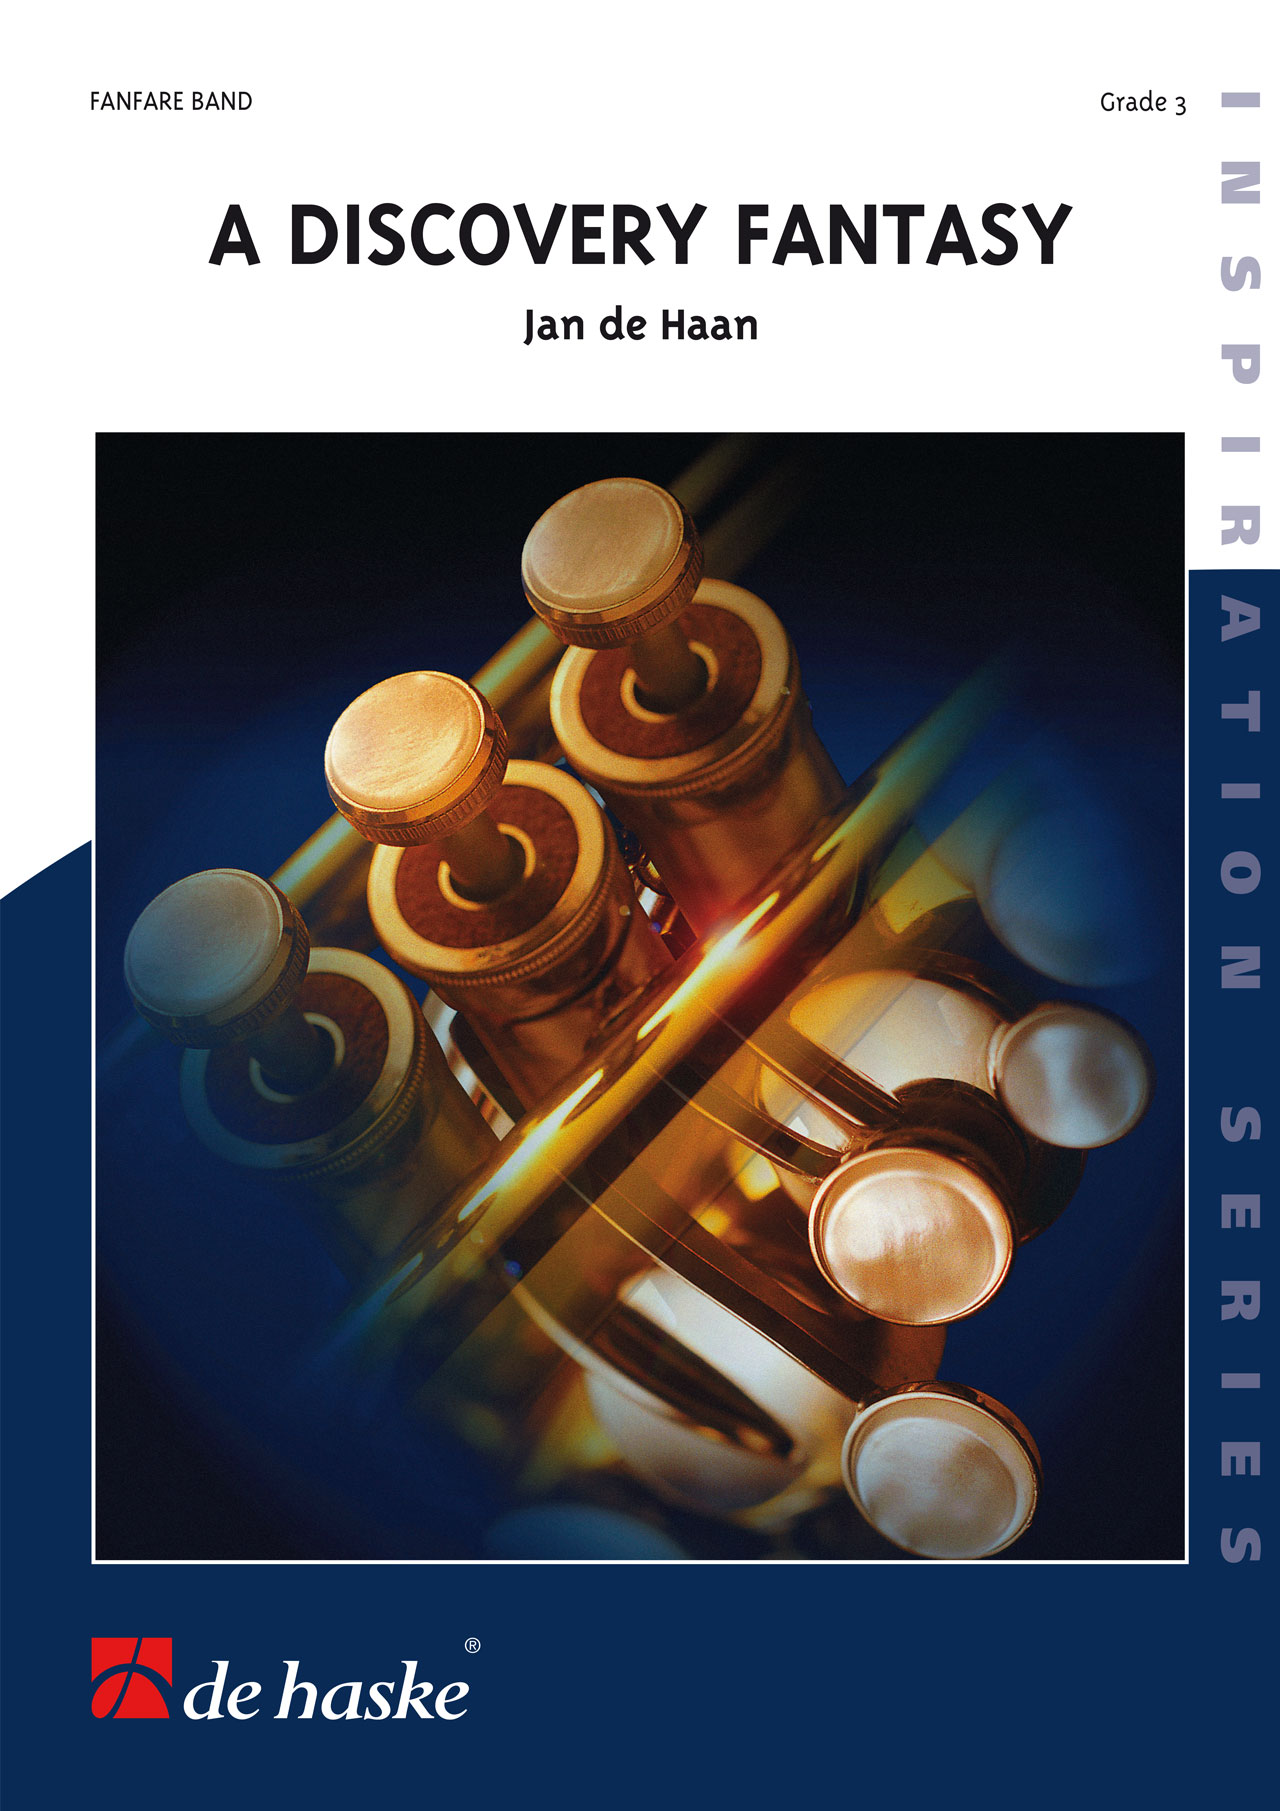 Jan de Haan: A Discovery Fantasy: Fanfare Band: Score